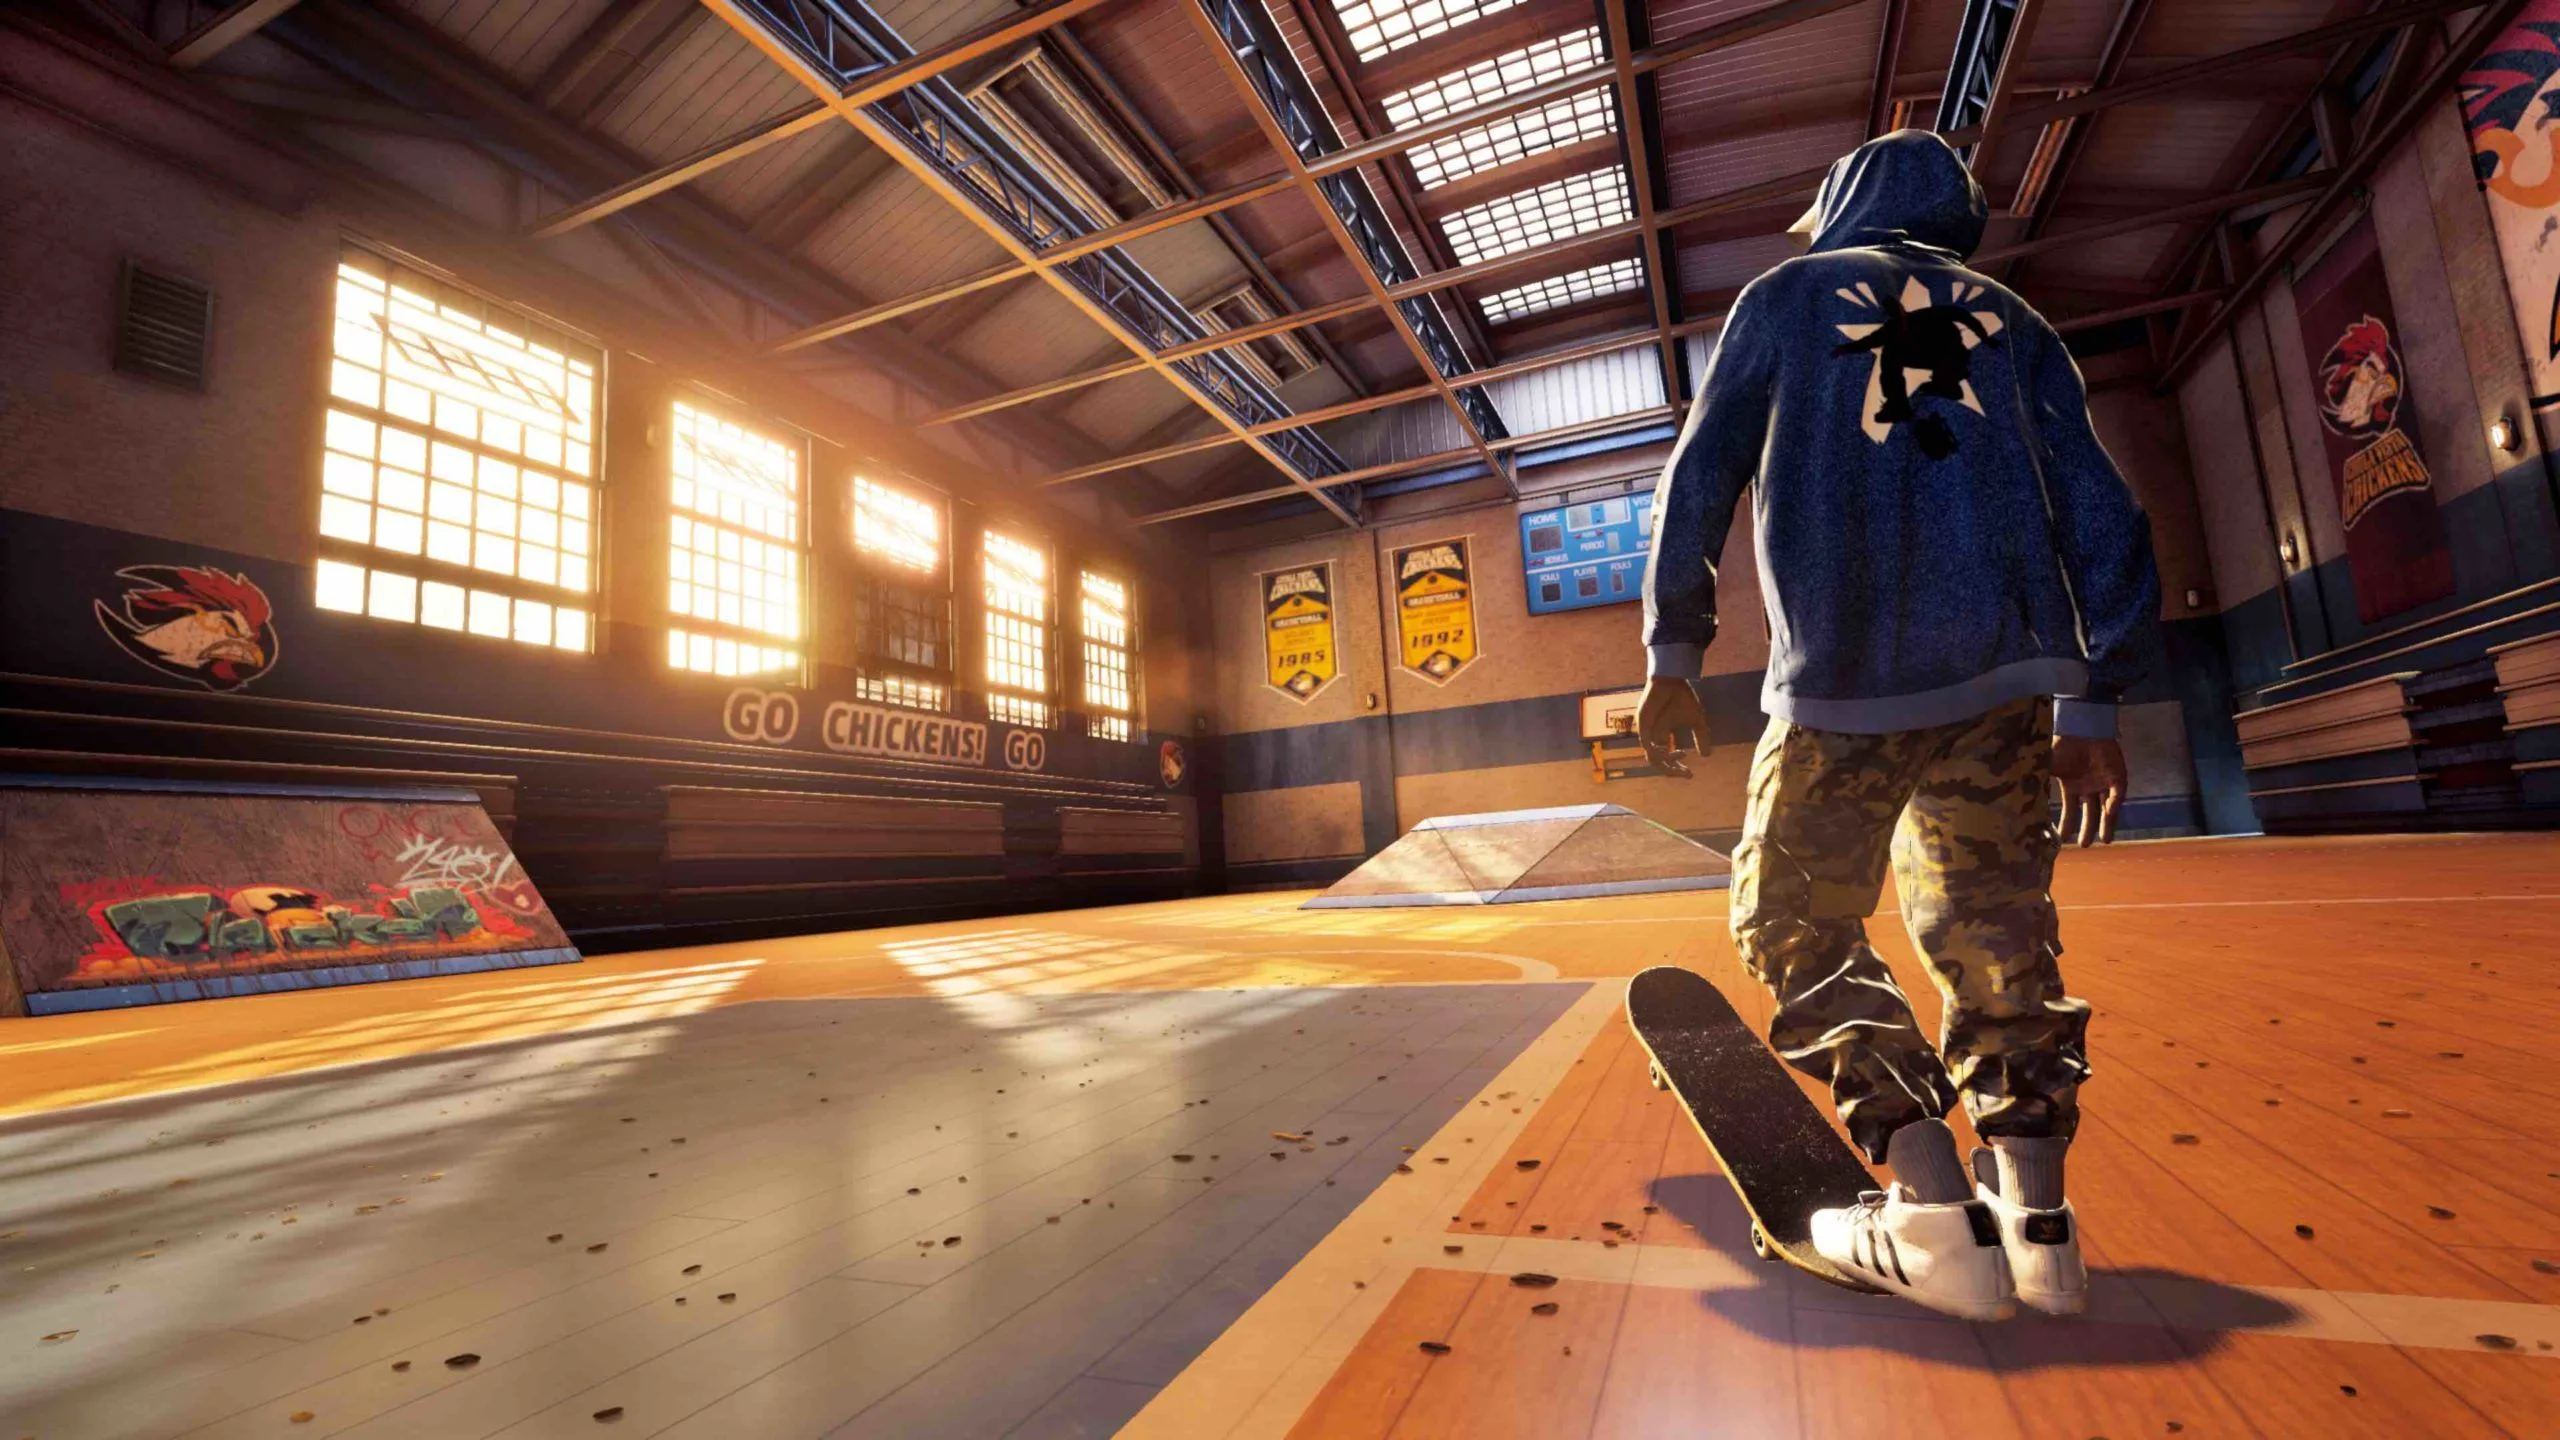 Tony Hawk's Pro Skater 1+2 will appear on Steam